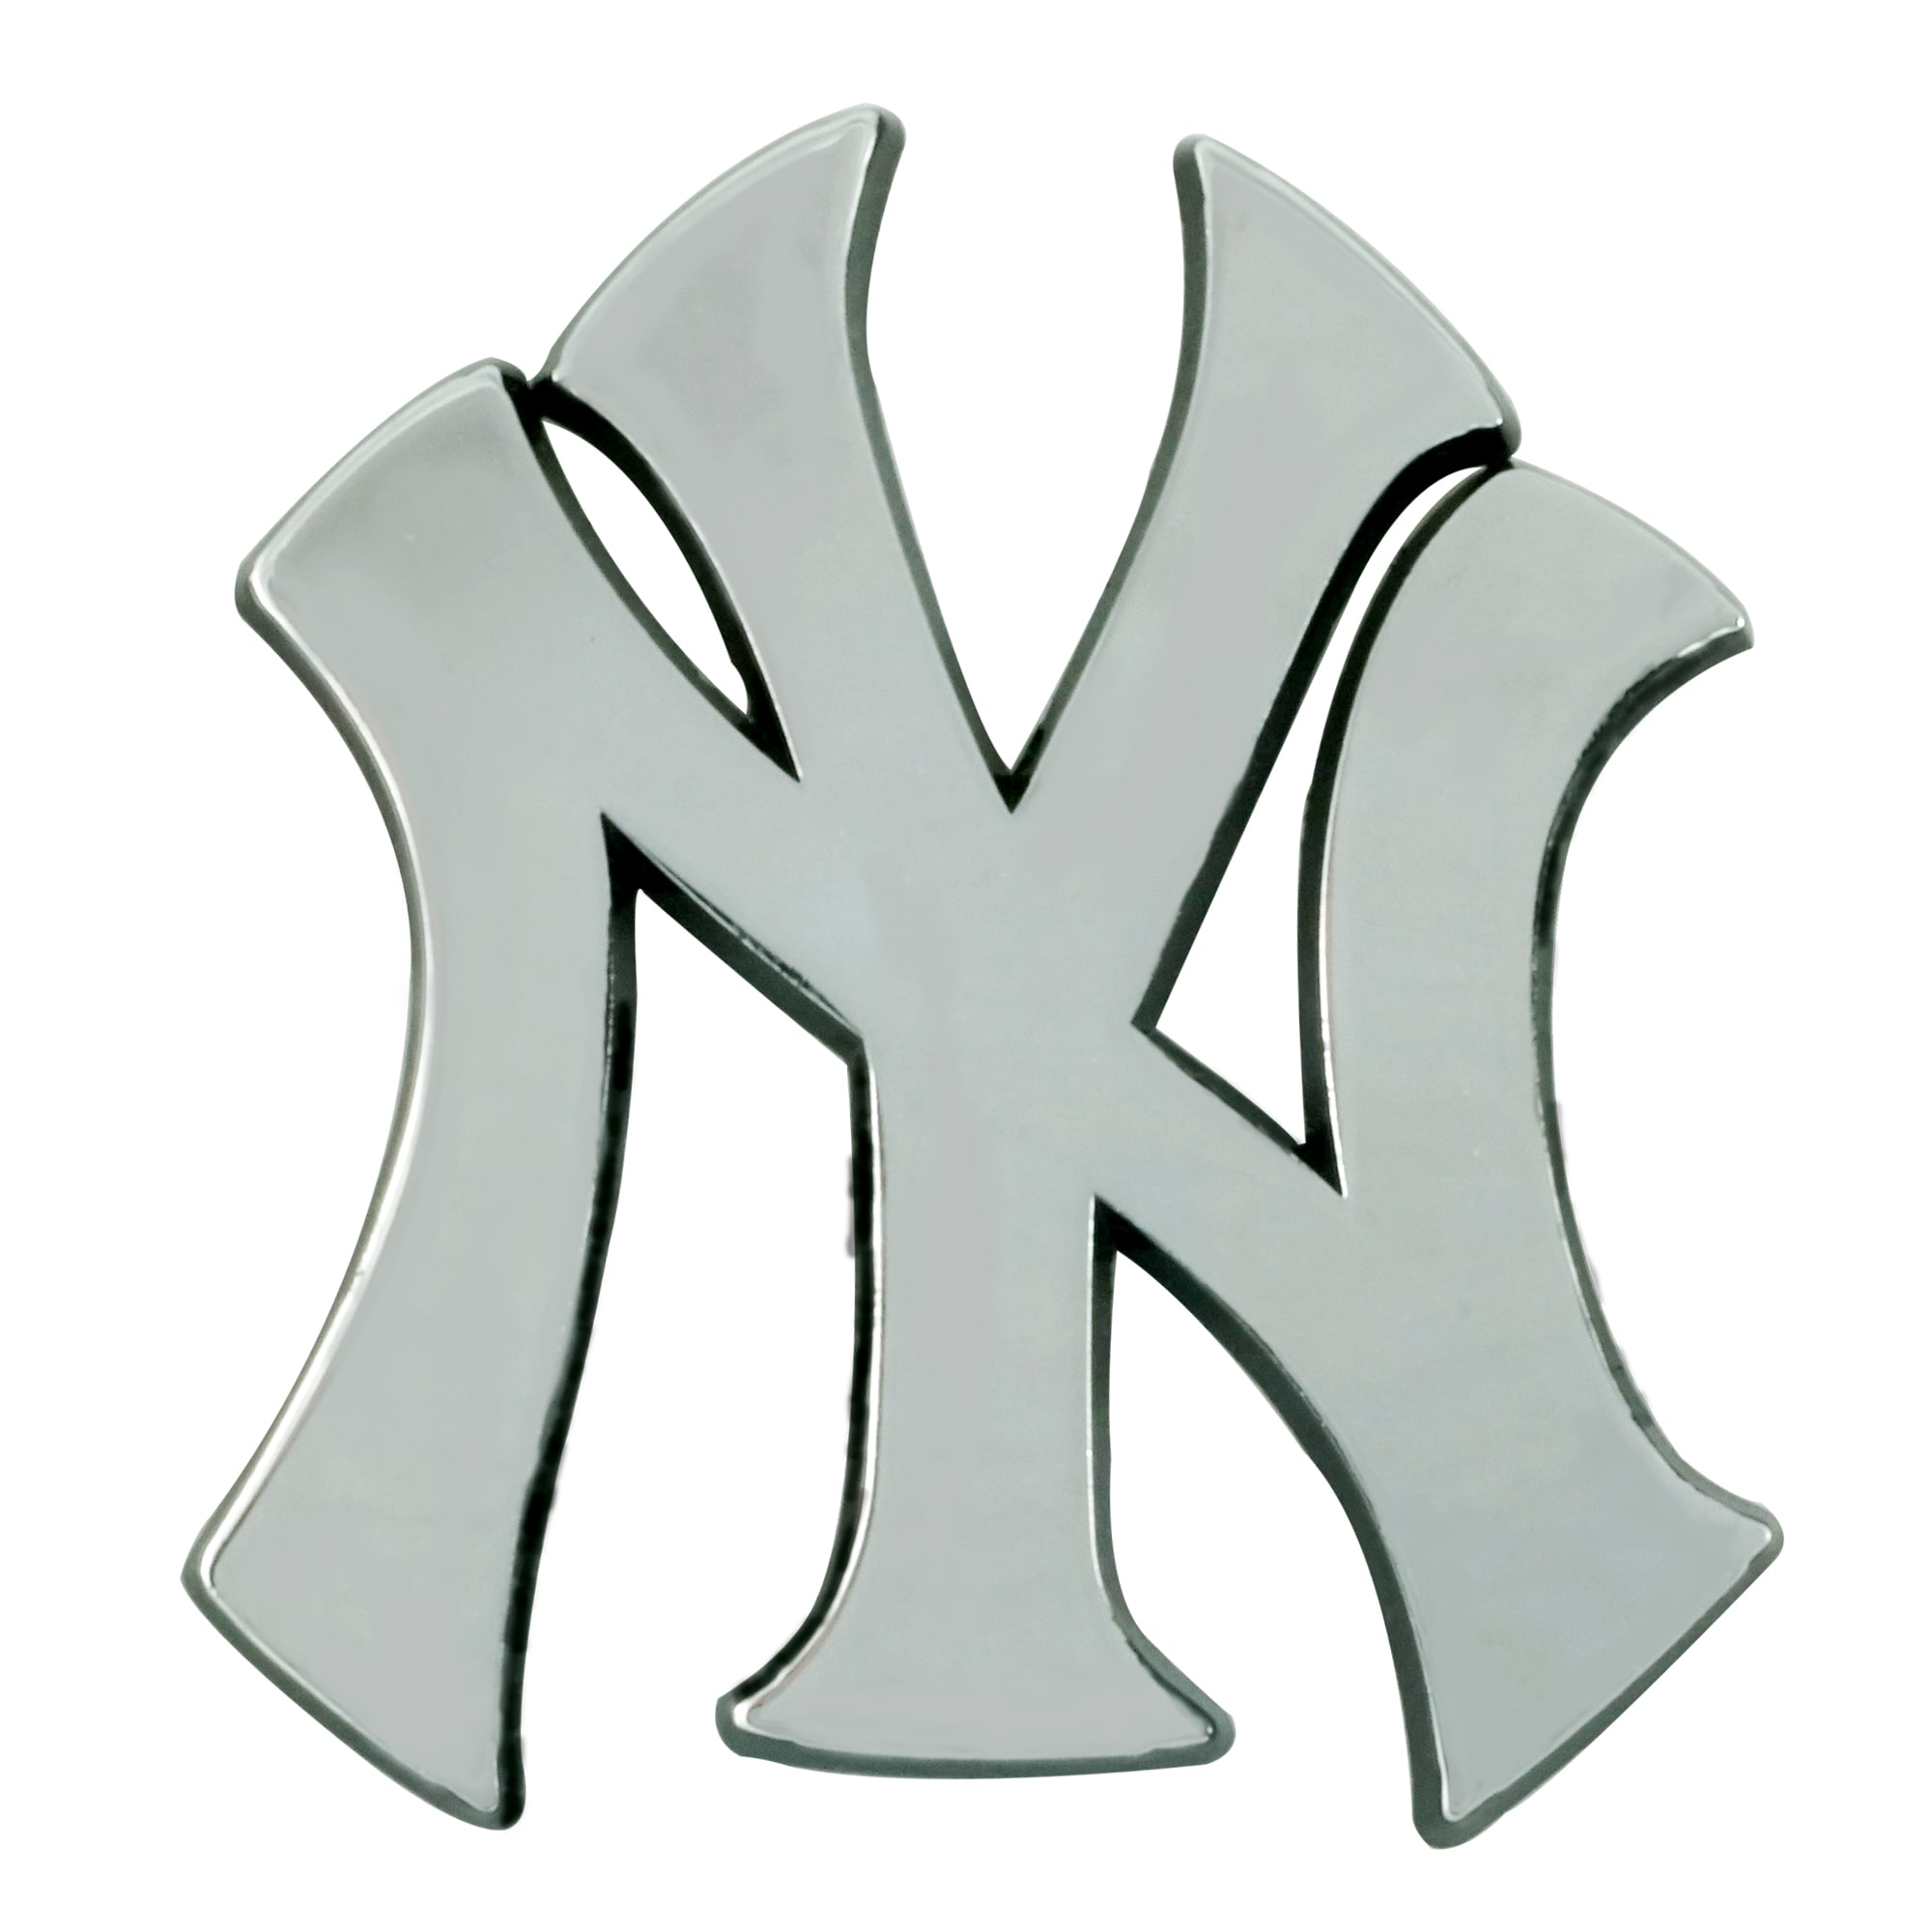 2023 MLB Season Preview: New York Yankees - Battery Power